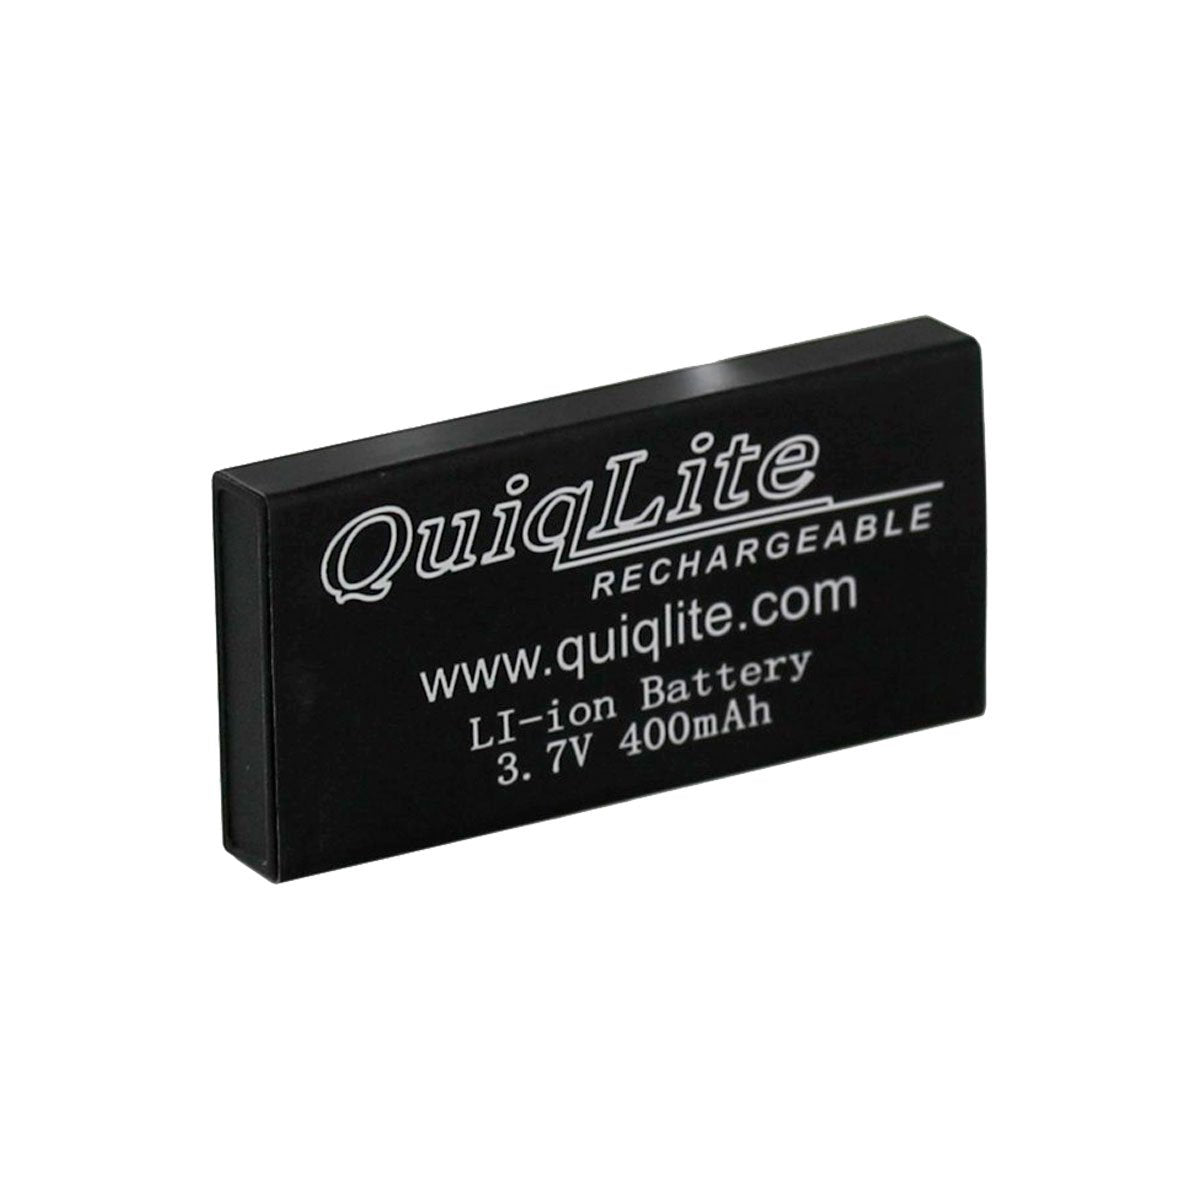 Quiqlite Replacement Lithium-Ion Battery for QuiqLiteX and QuiqLiteX2 Flashlights and Lighting Quiqlite Tactical Gear Supplier Tactical Distributors Australia